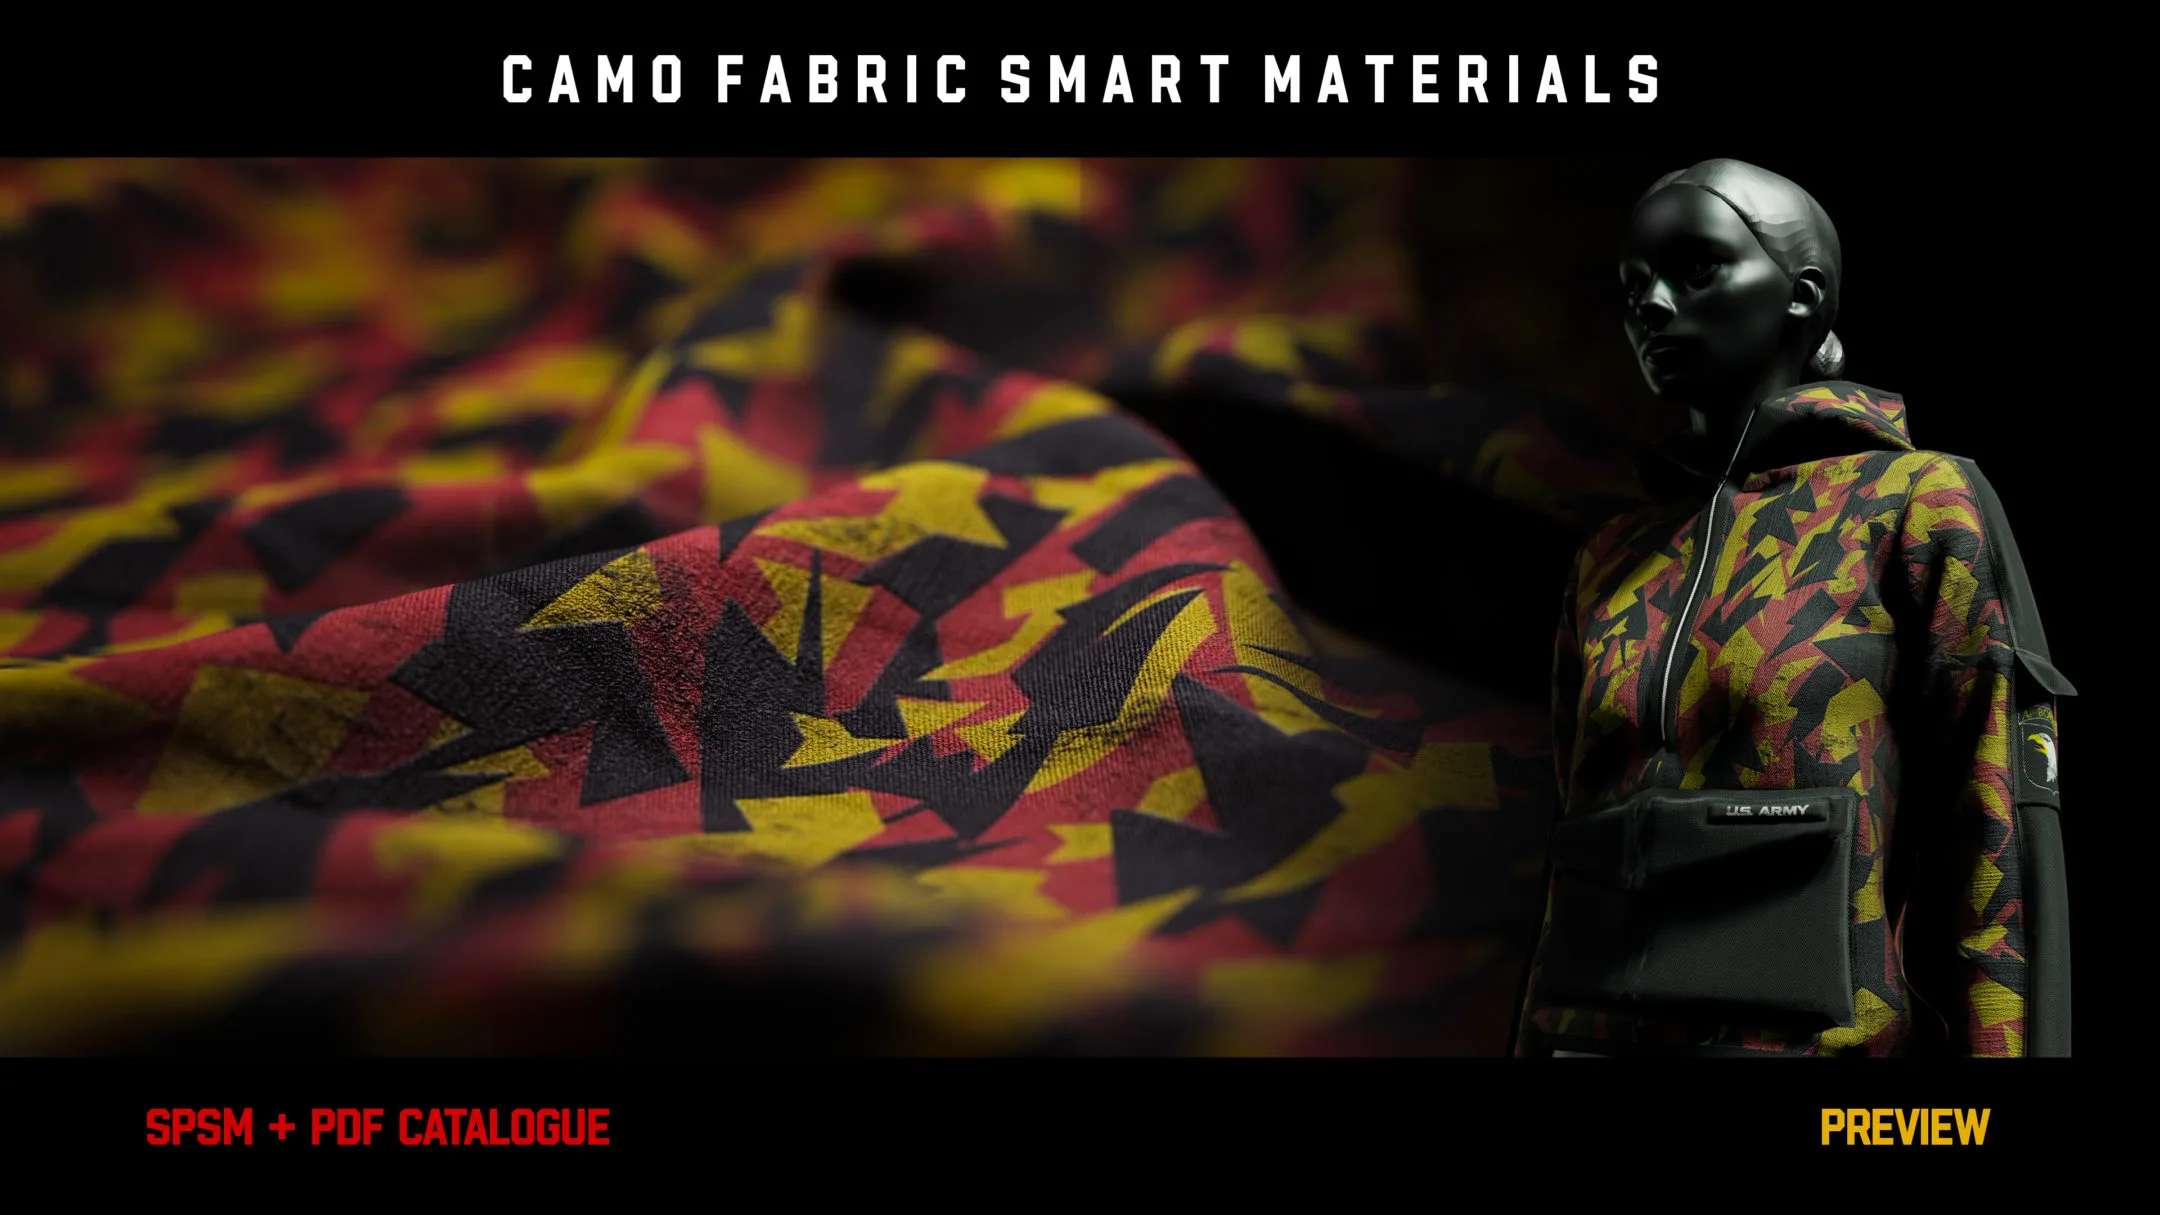 ” 15 High Detailed Camo Fabric Smart Materials ” (vol.1)